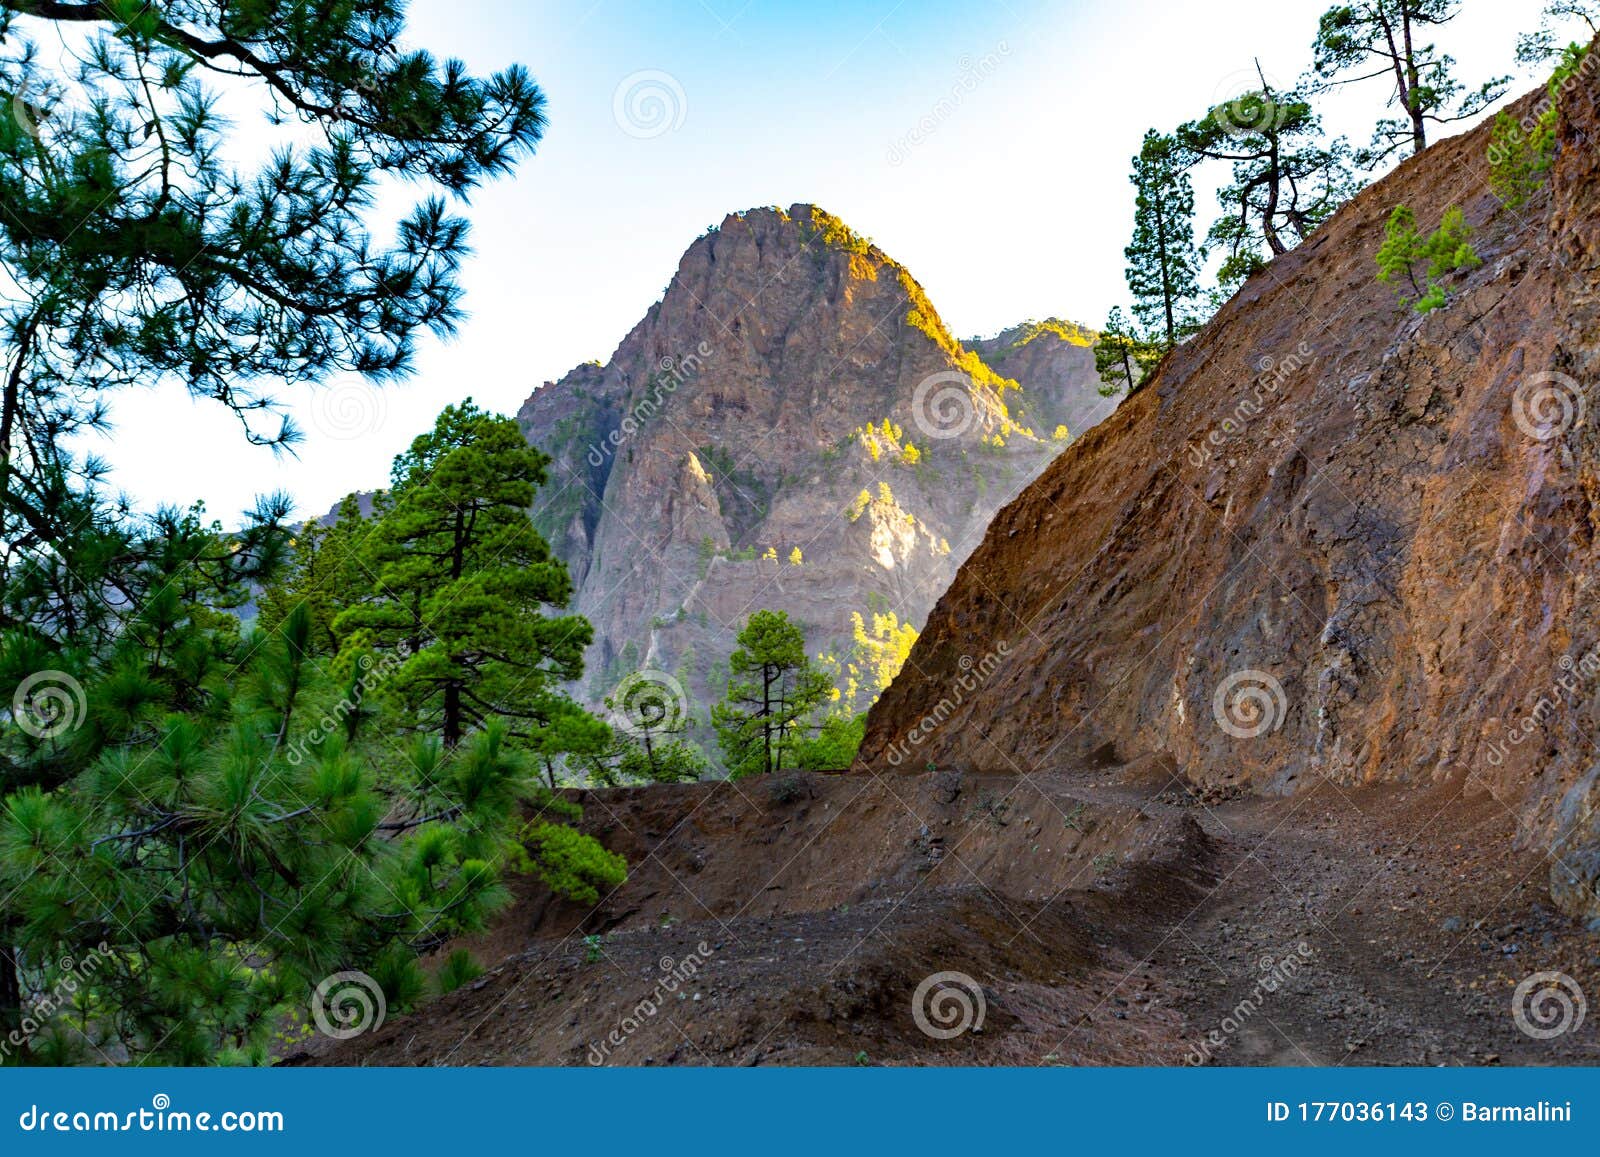 scenic view on caldera de taburiente with green pine forest, ravines and rocky mountains near viewpoint cumbrecita, la palma,